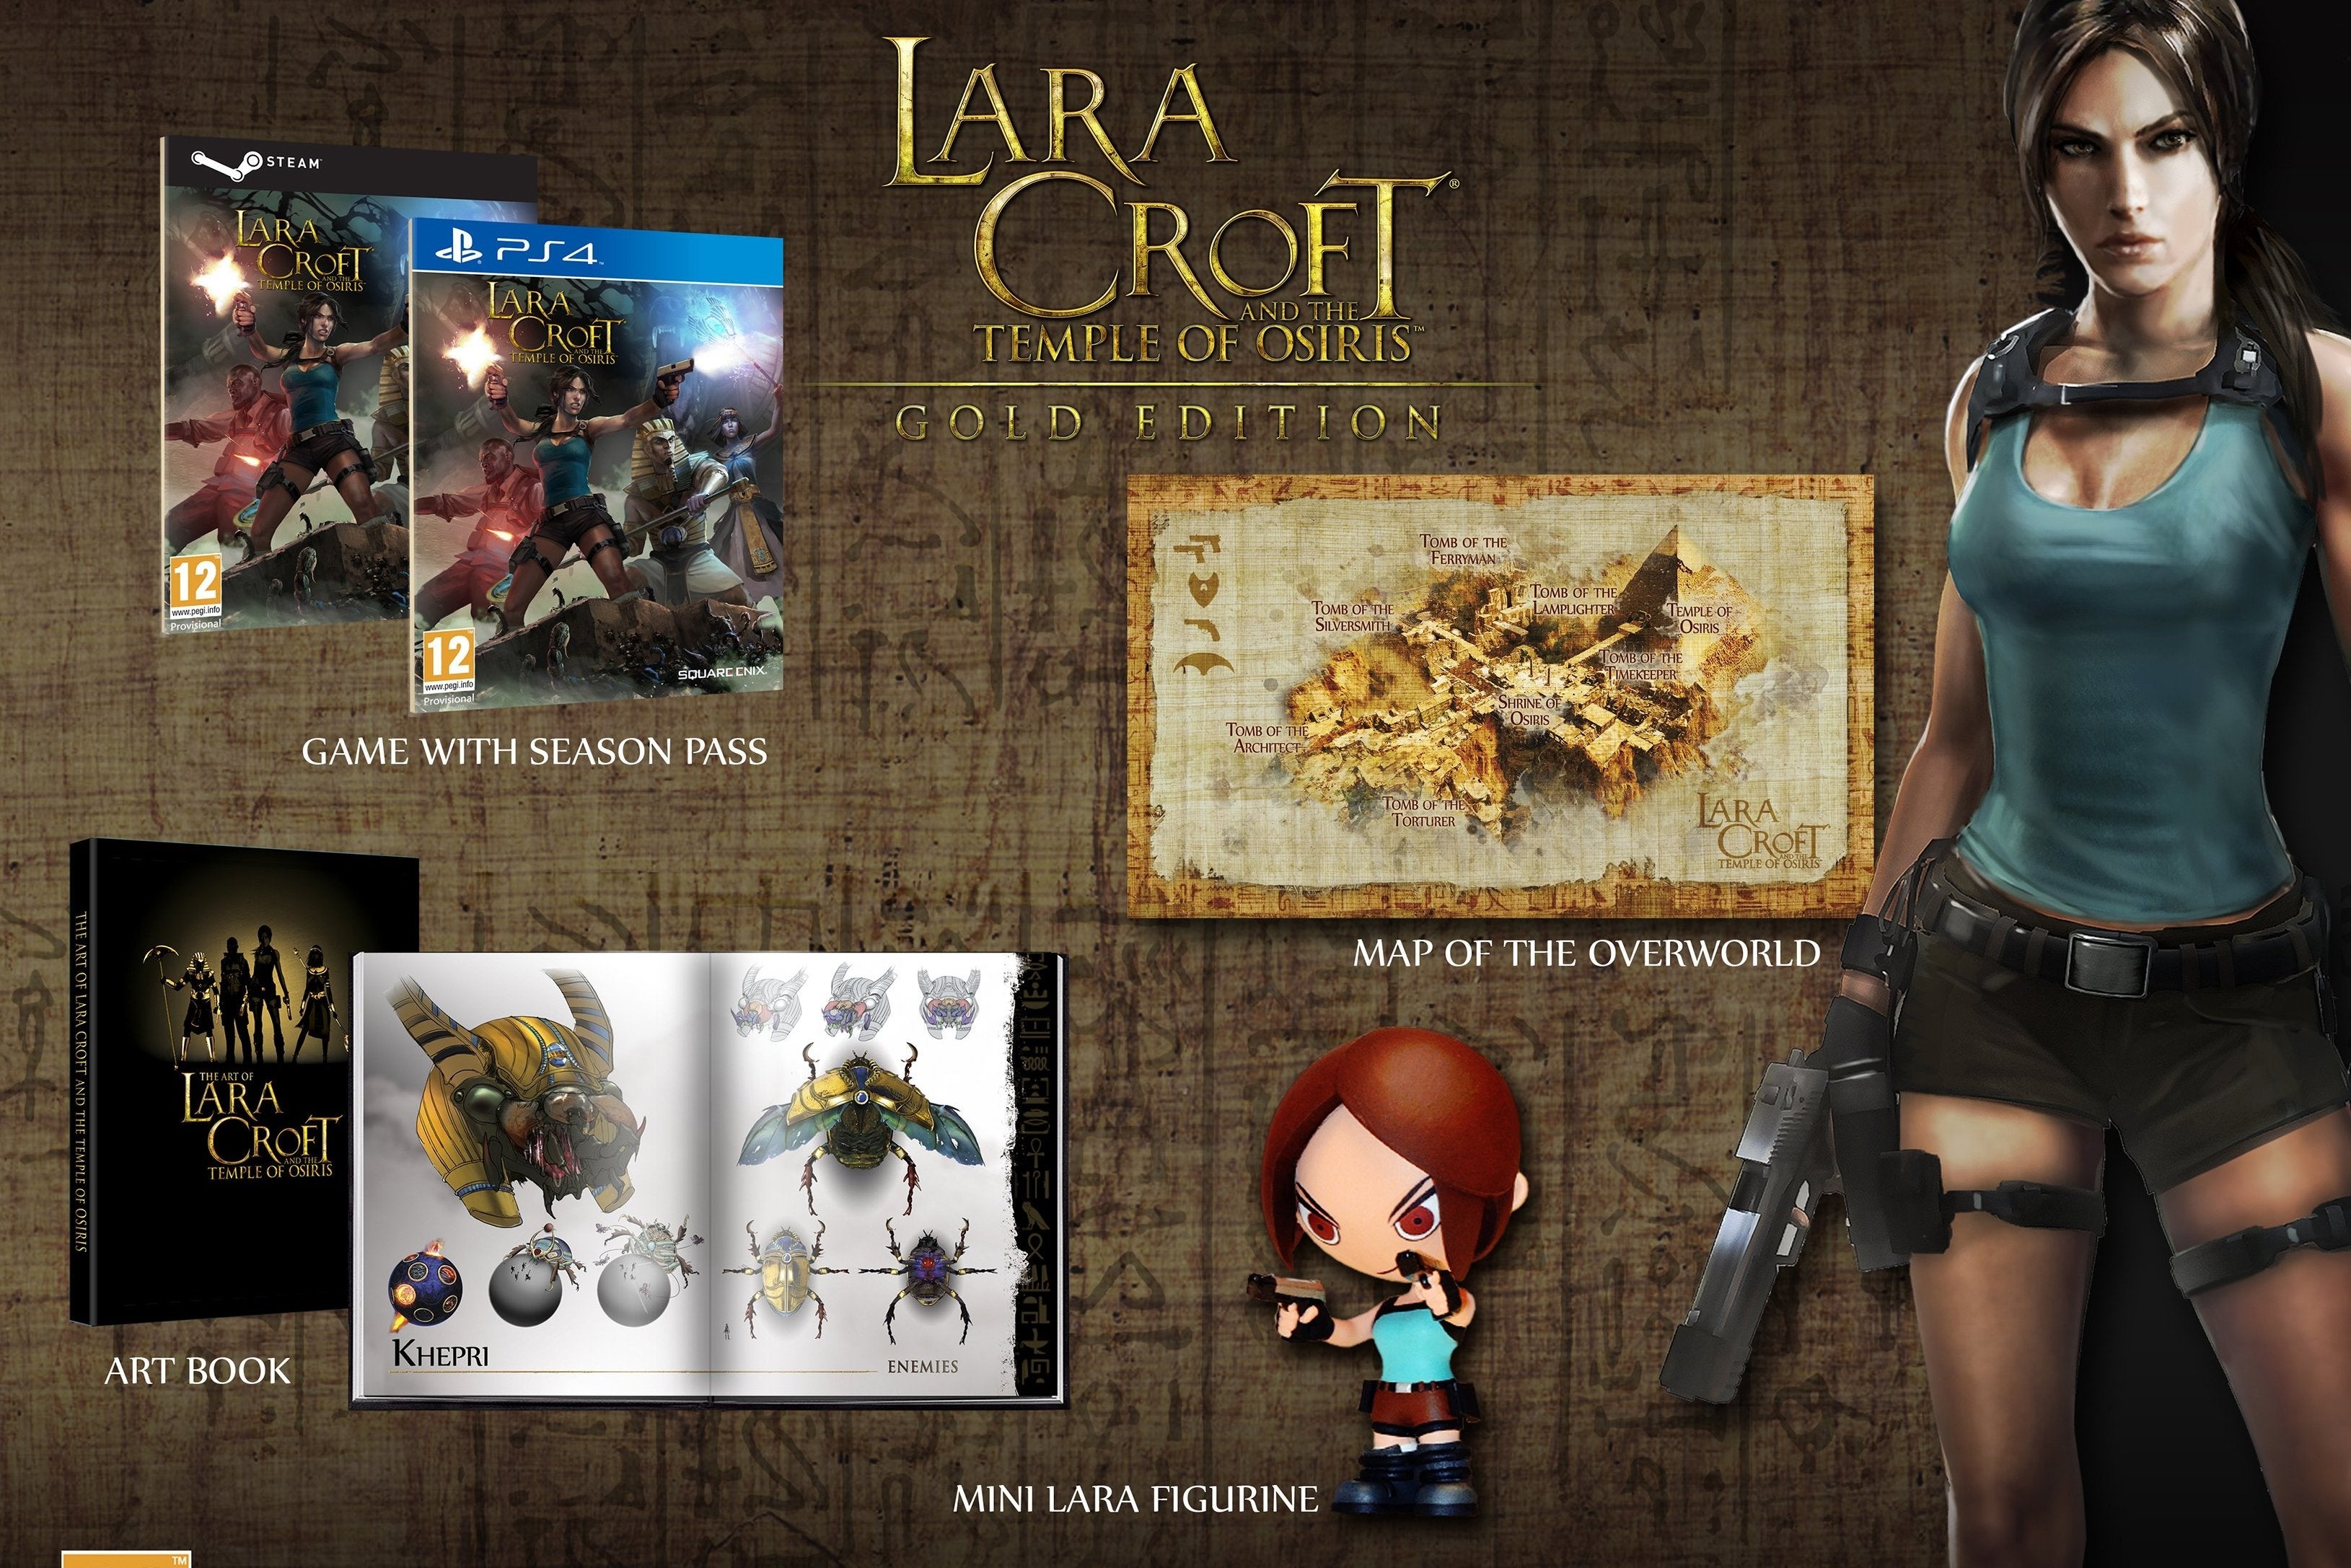 Imagen para Lara Croft and the Temple of Osiris tendrá edición Gold y pase de temporada